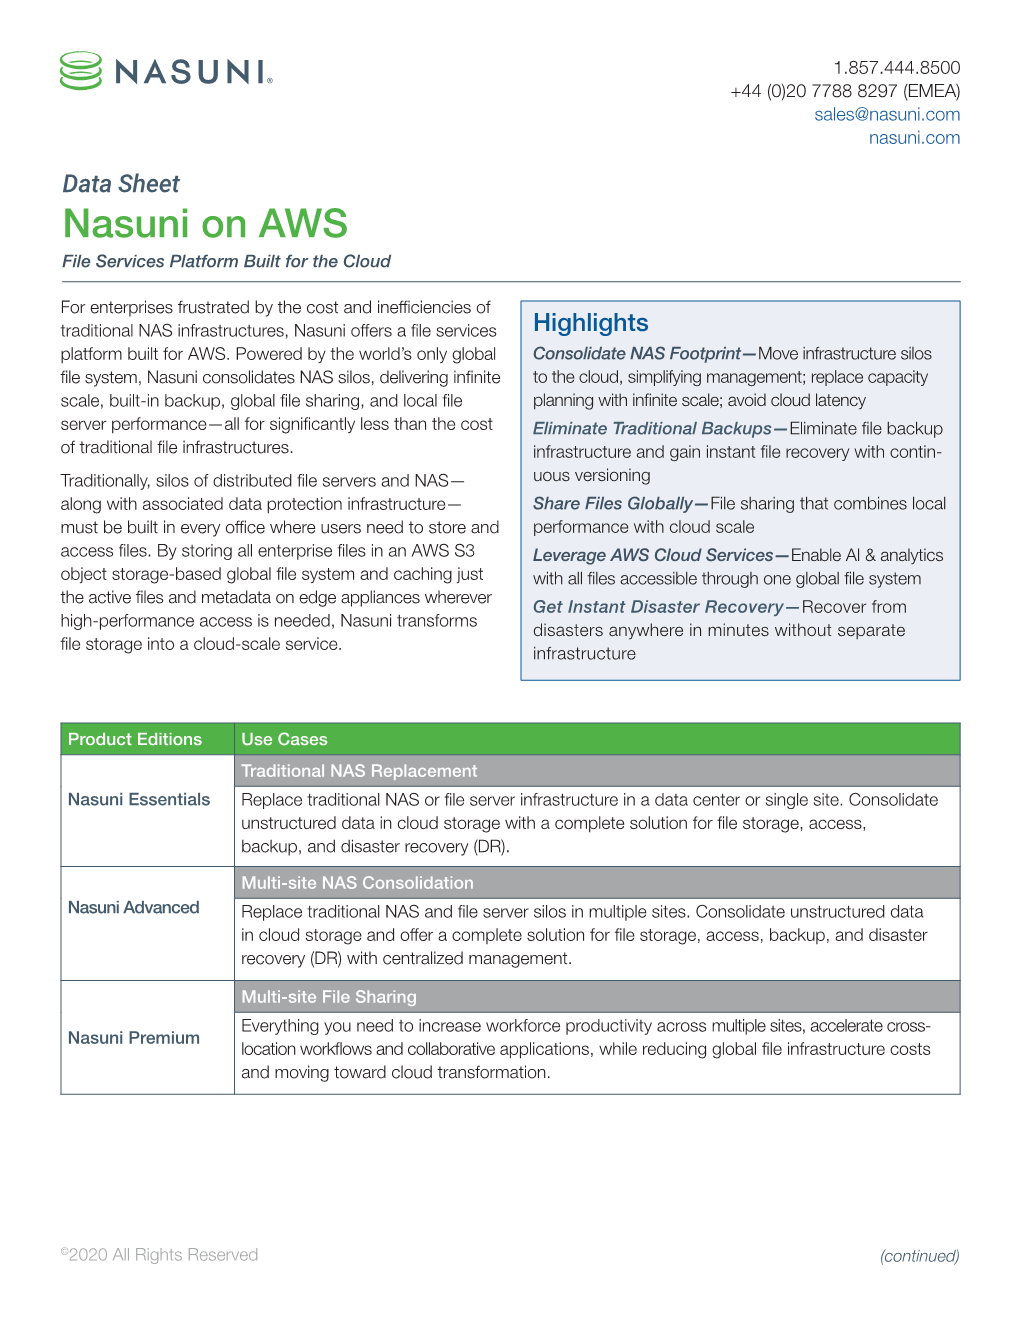 Nasuni on AWS File Services Platform Built for the Cloud